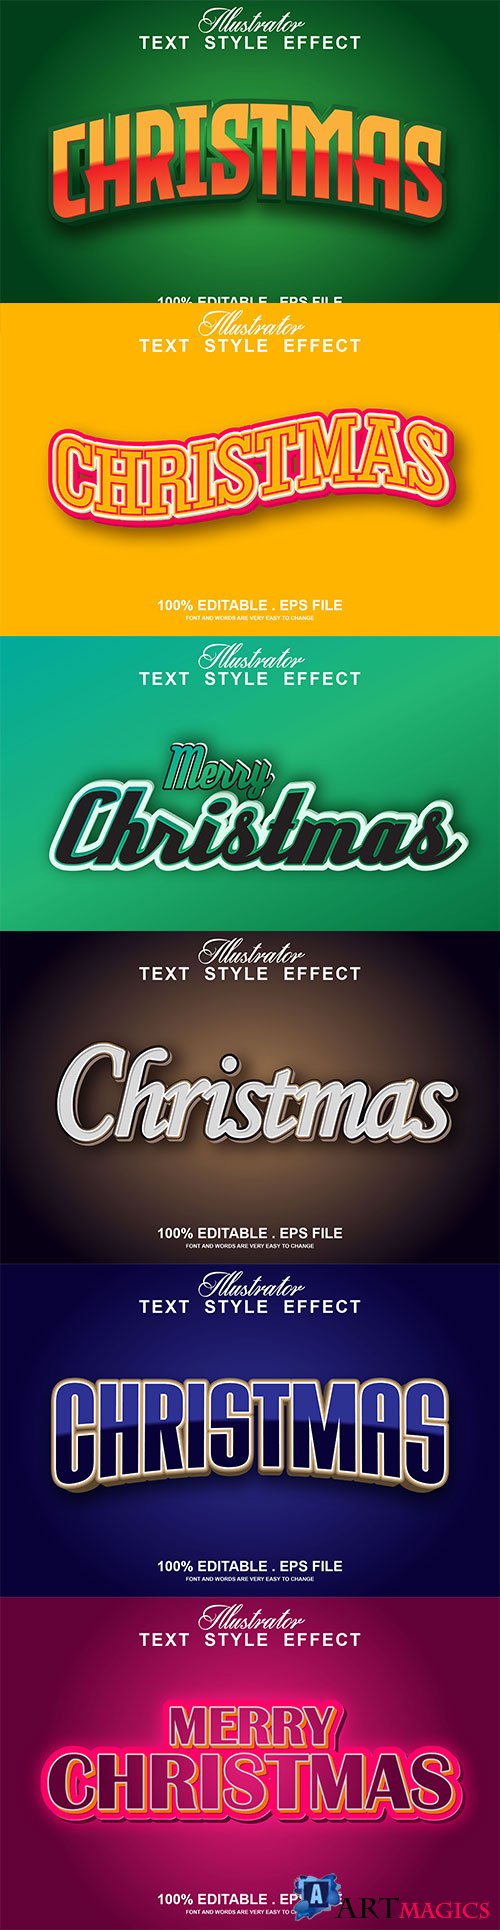 2022 New year, Merry christmas editable text effect premium vector vol 13